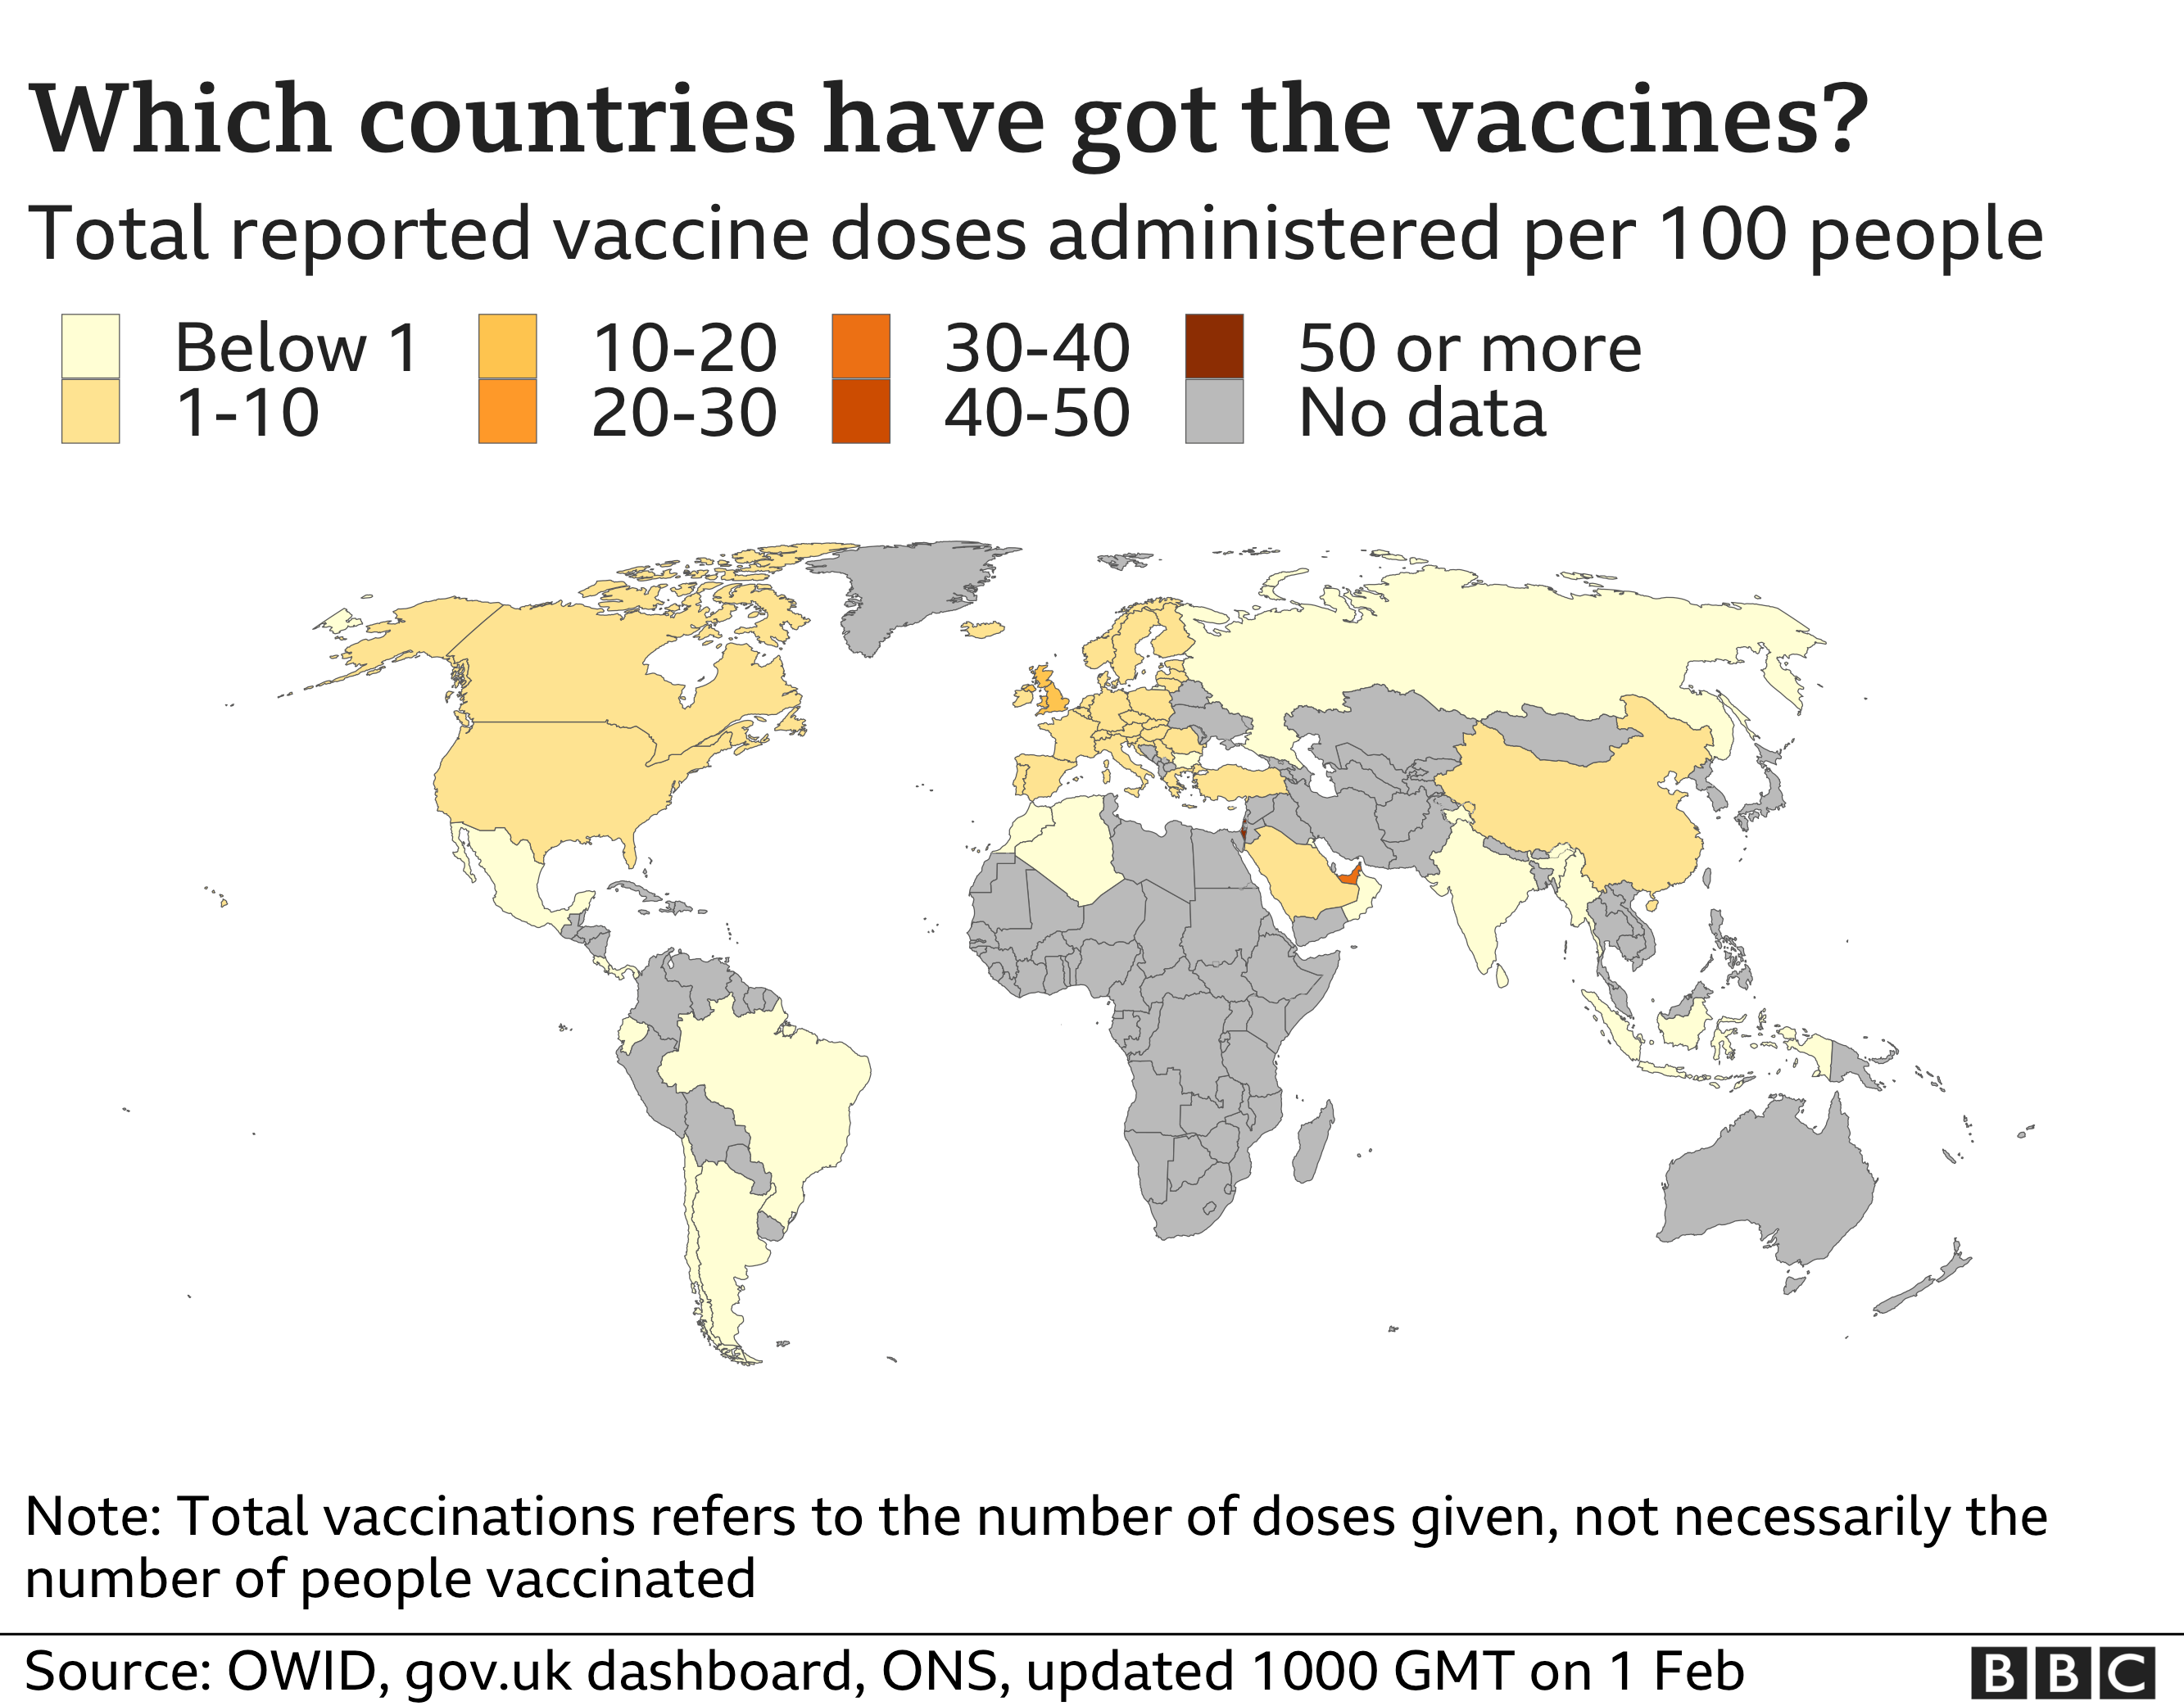 vaccine production us